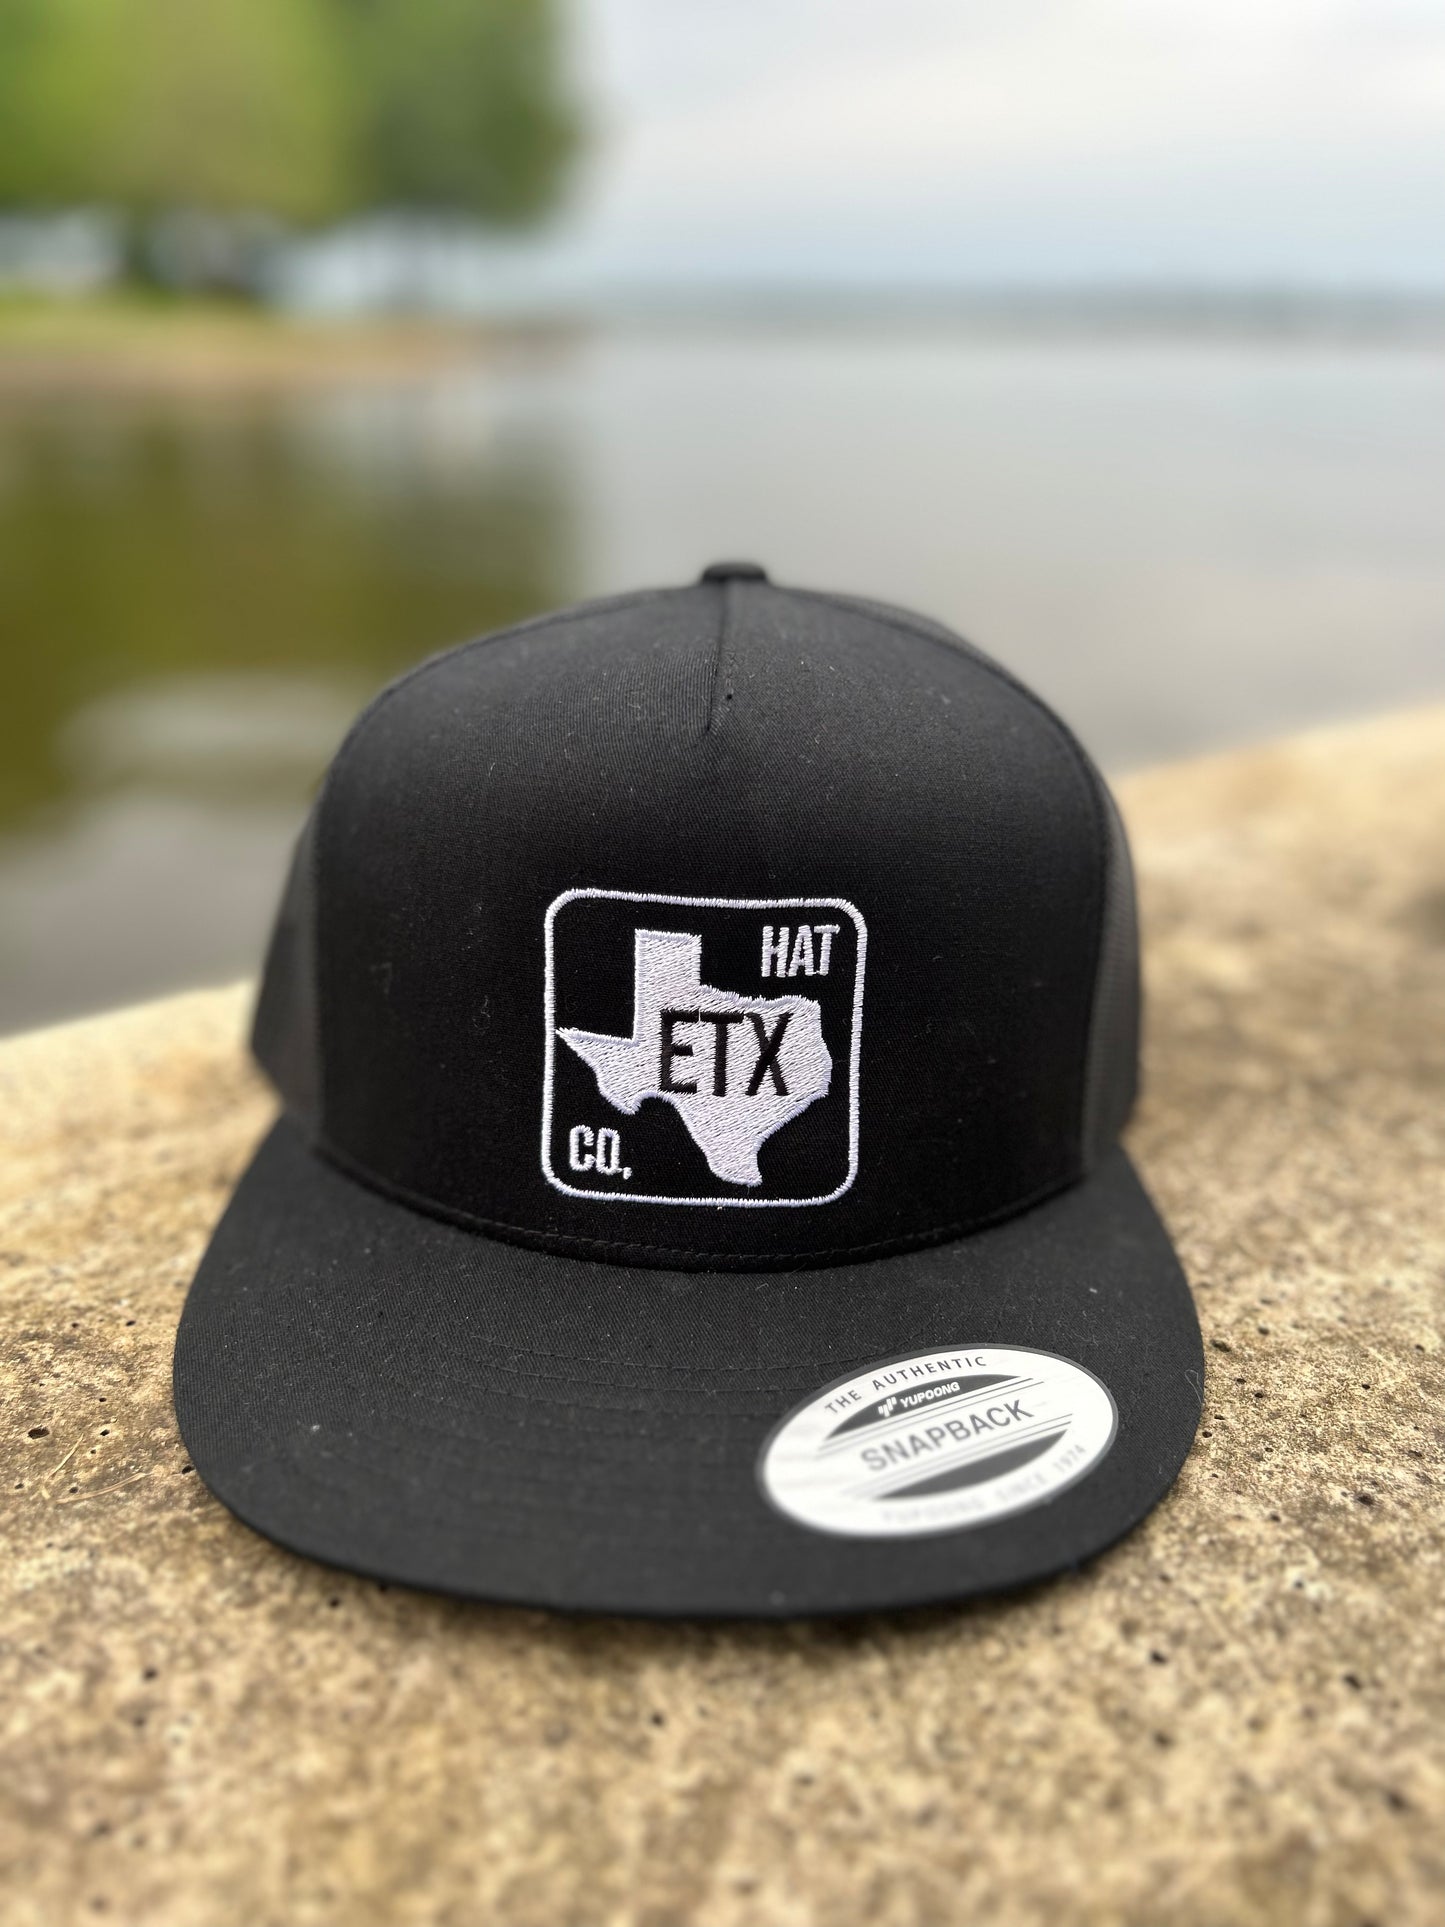 ETX Road Sign Hat - Black Classic